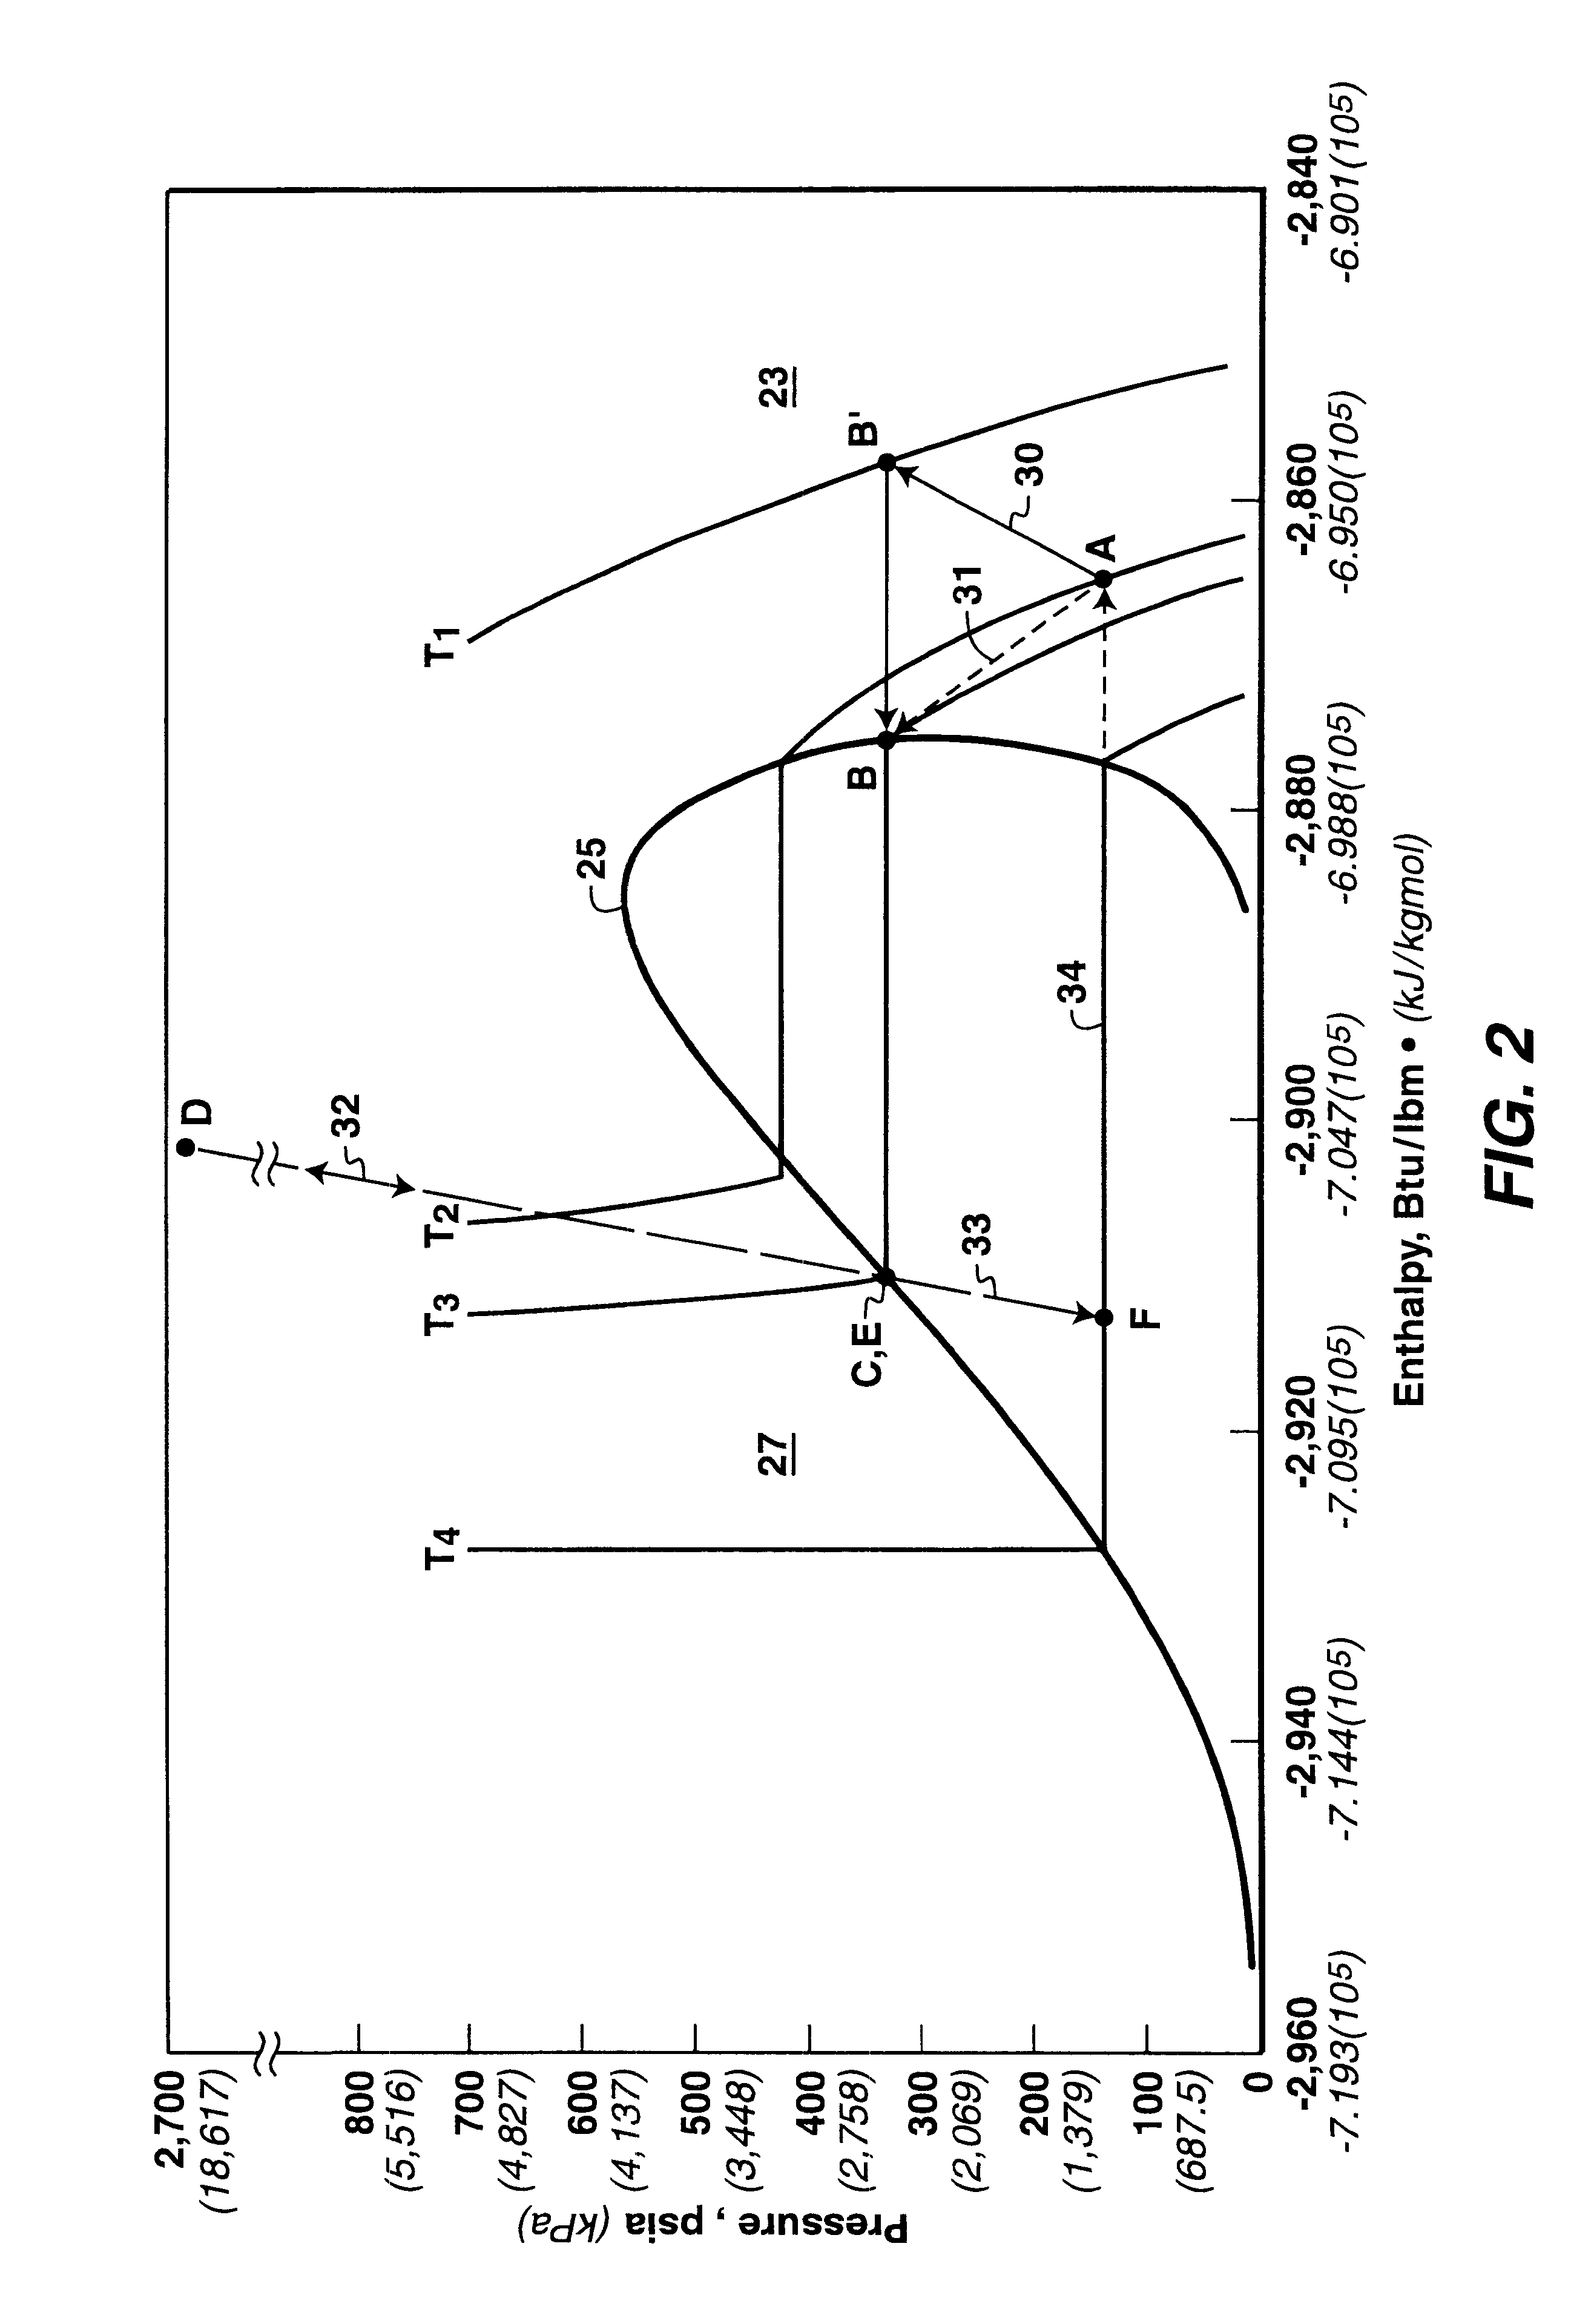 Thermodynamic cycle using hydrostatic head for compression